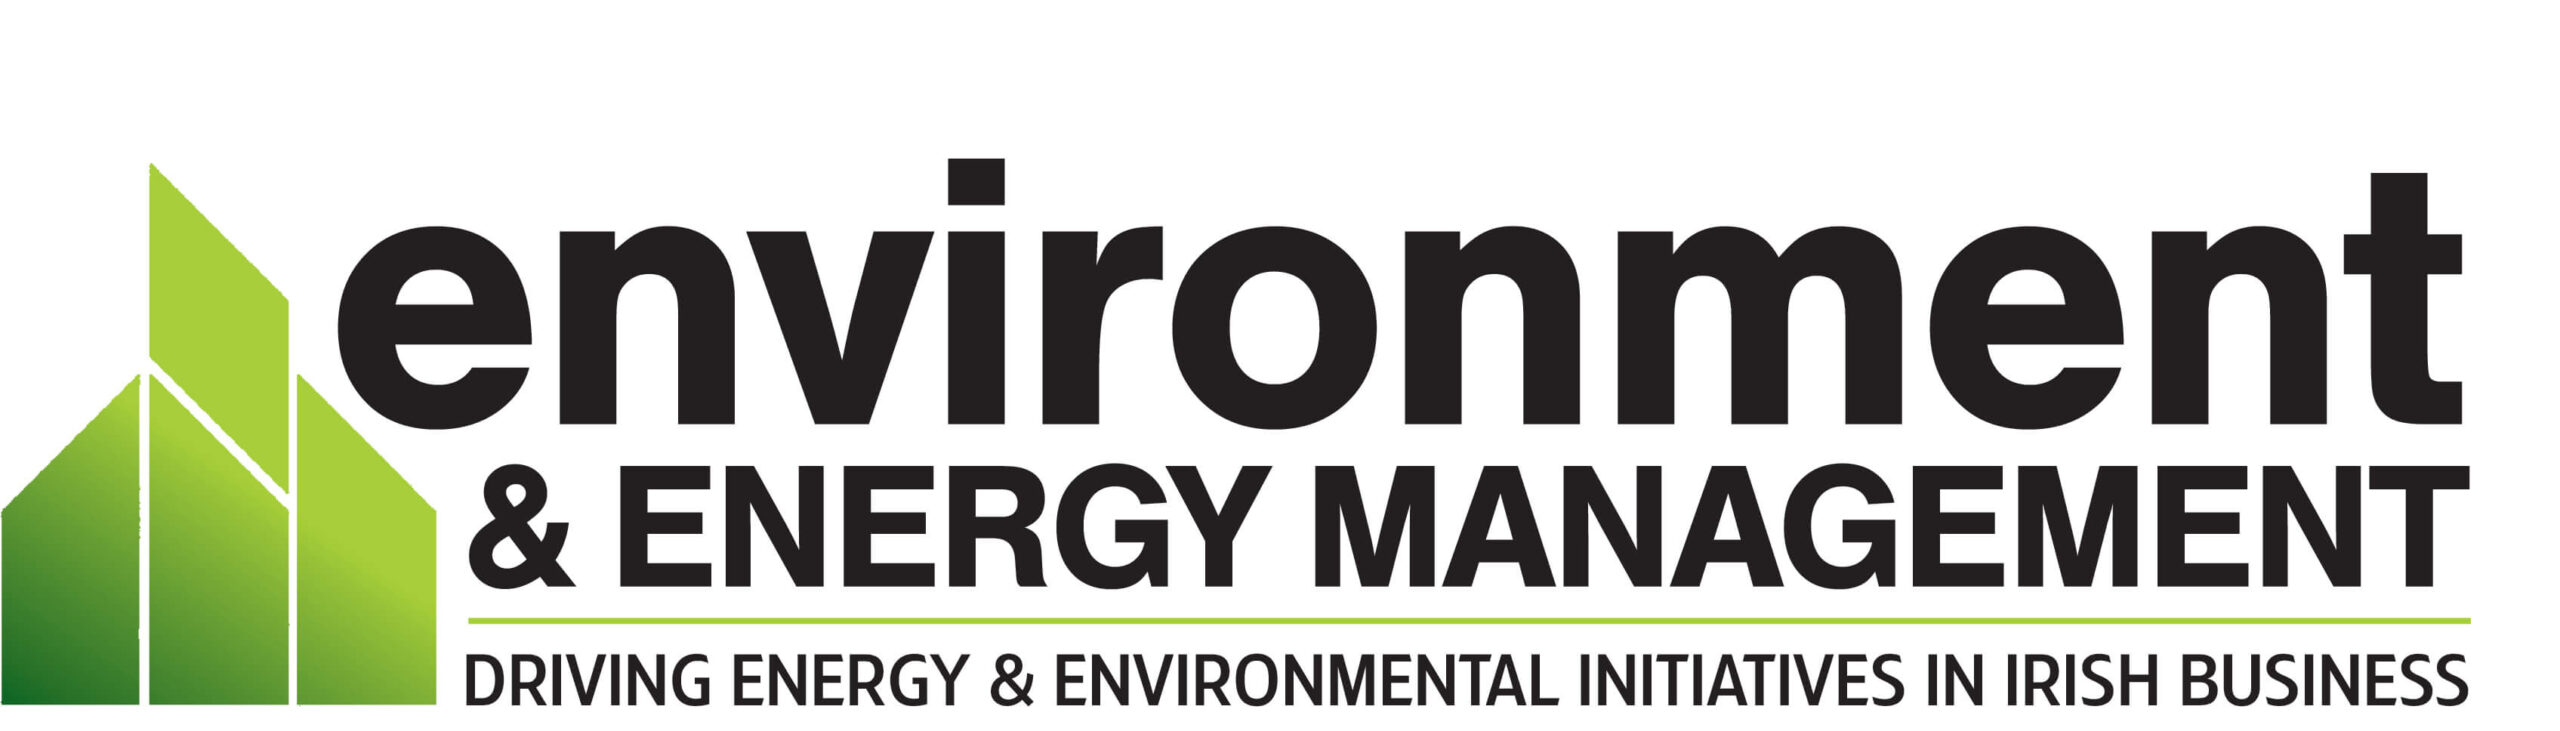 Environment & Energy Management